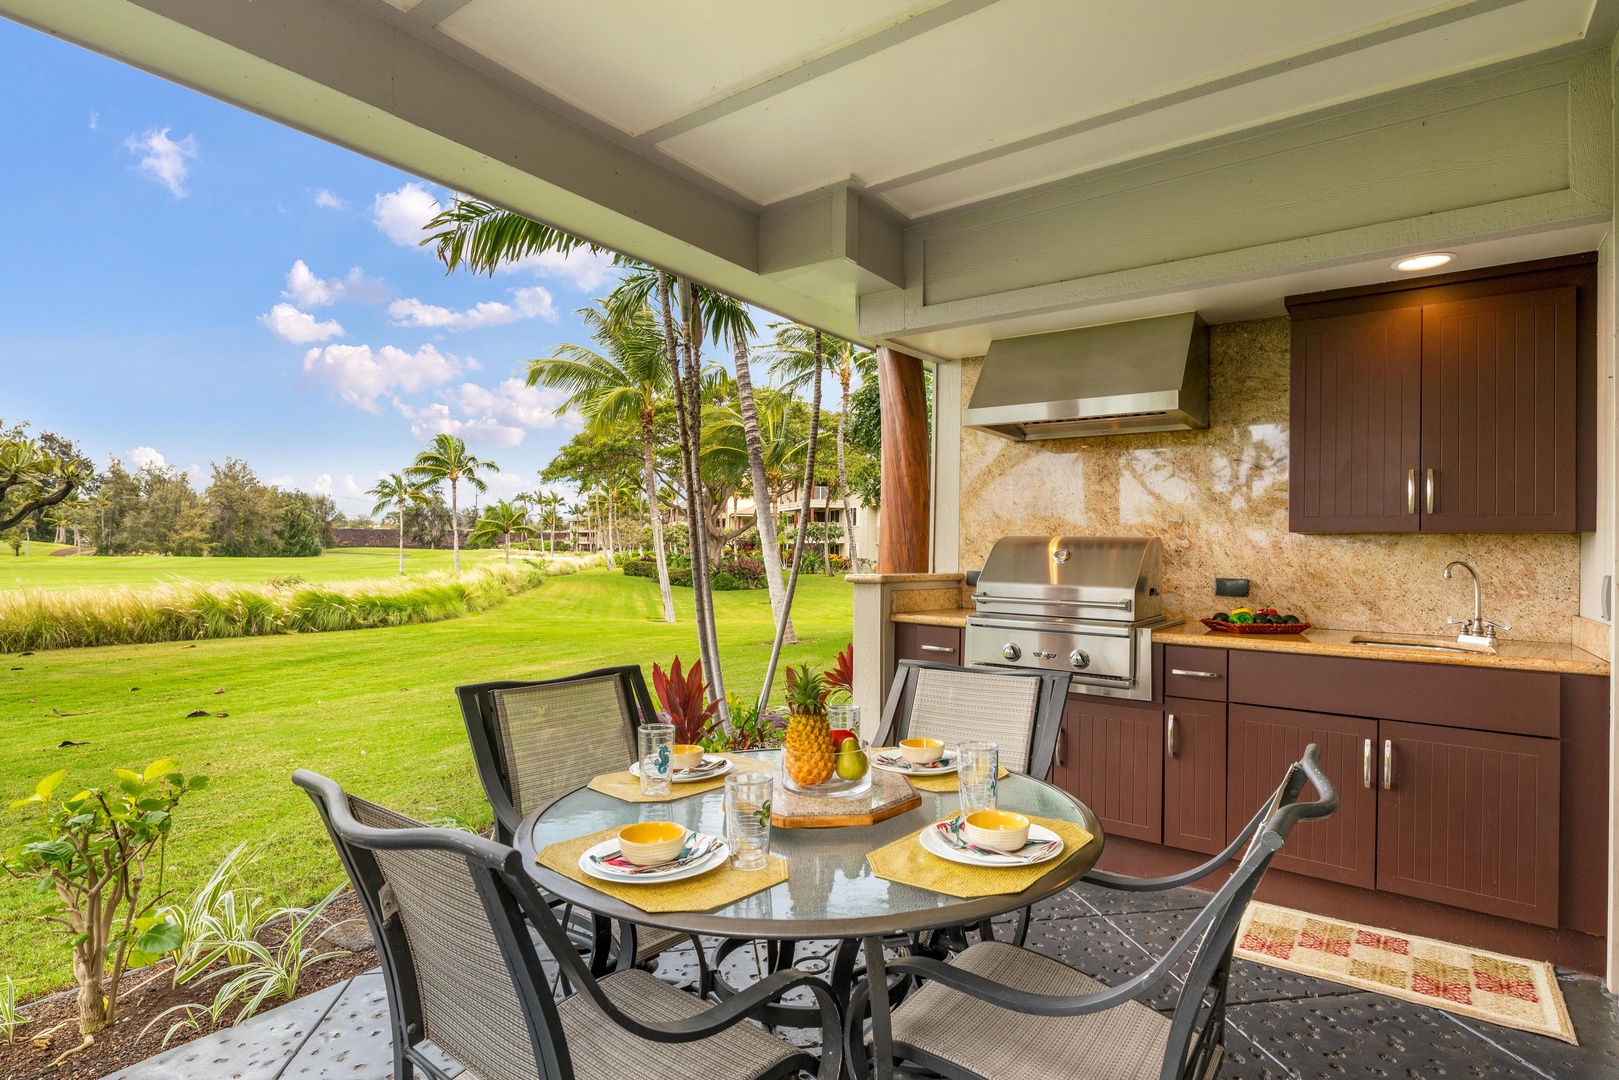 J2 Waikoloa Beach Villas. Hilton Waikoloa Pool Pass for 2023. Waikoloa Golf Discounts!